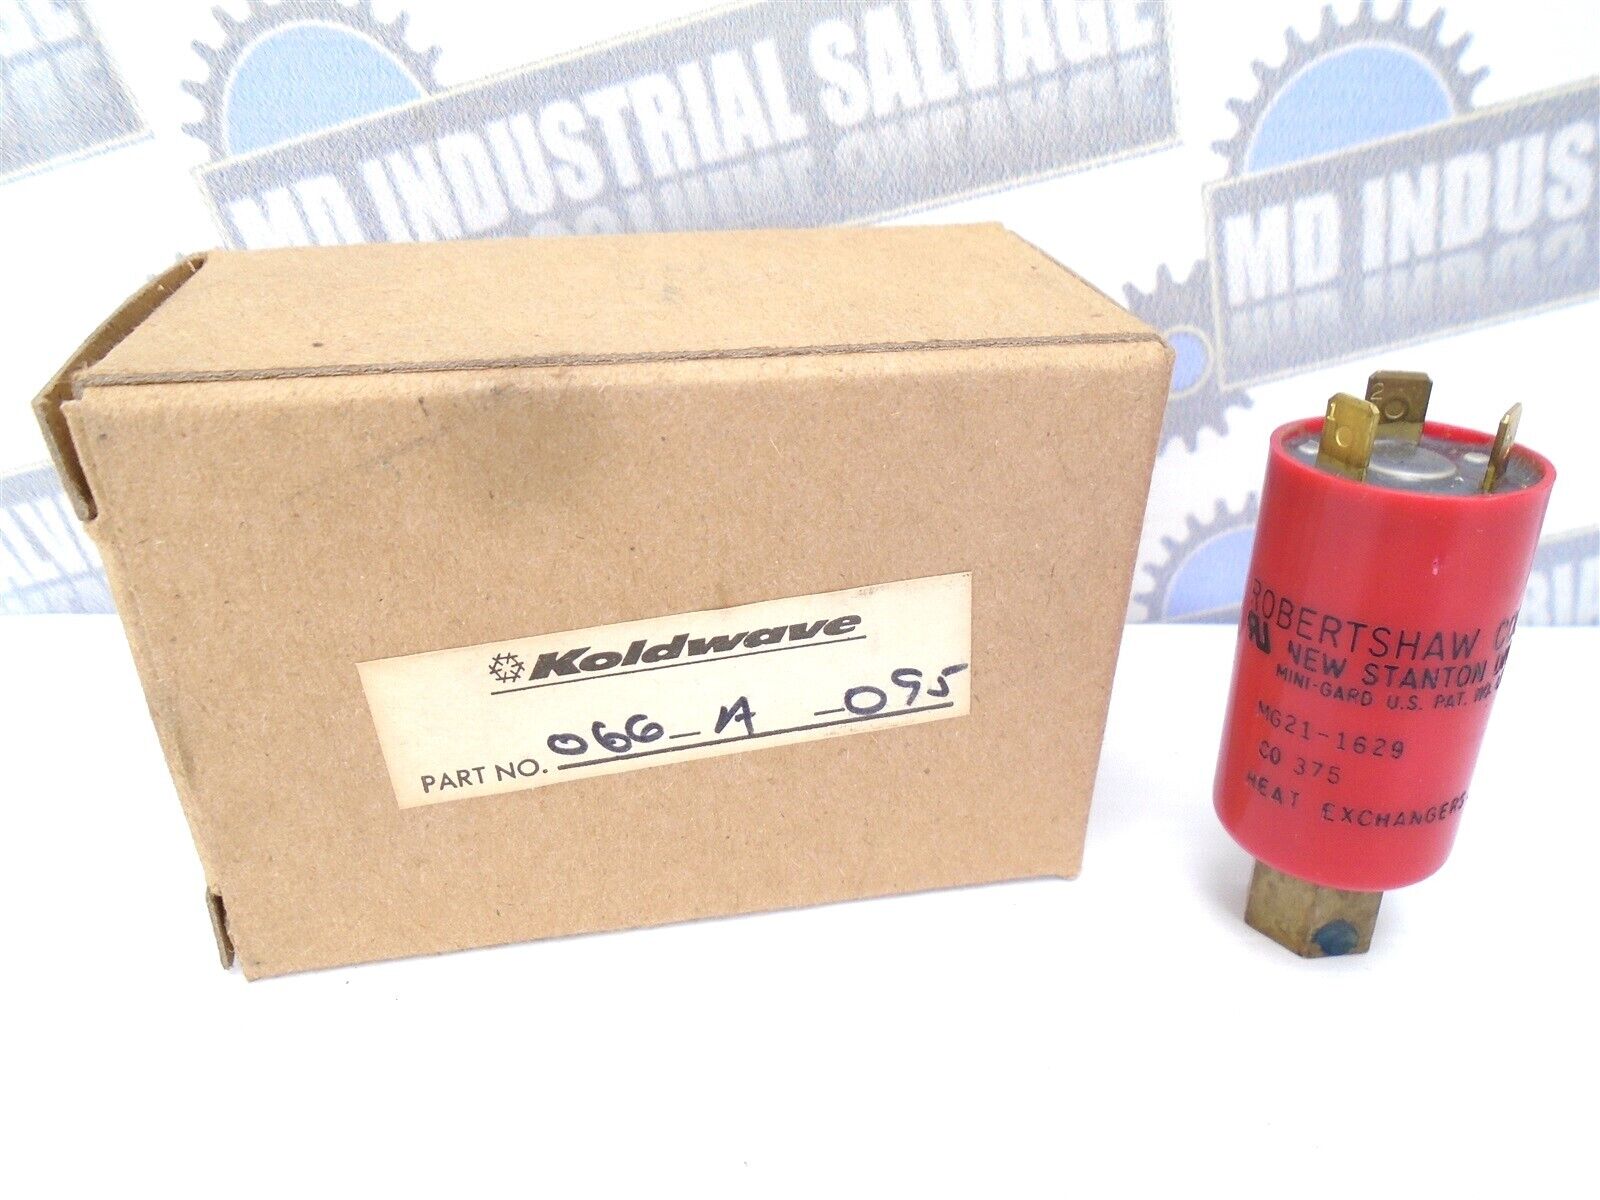 ROBERTSHAW - Pressure CONTROL SWITCH - MG21-1629 - for Koldwave 066-A-095 (NIB)